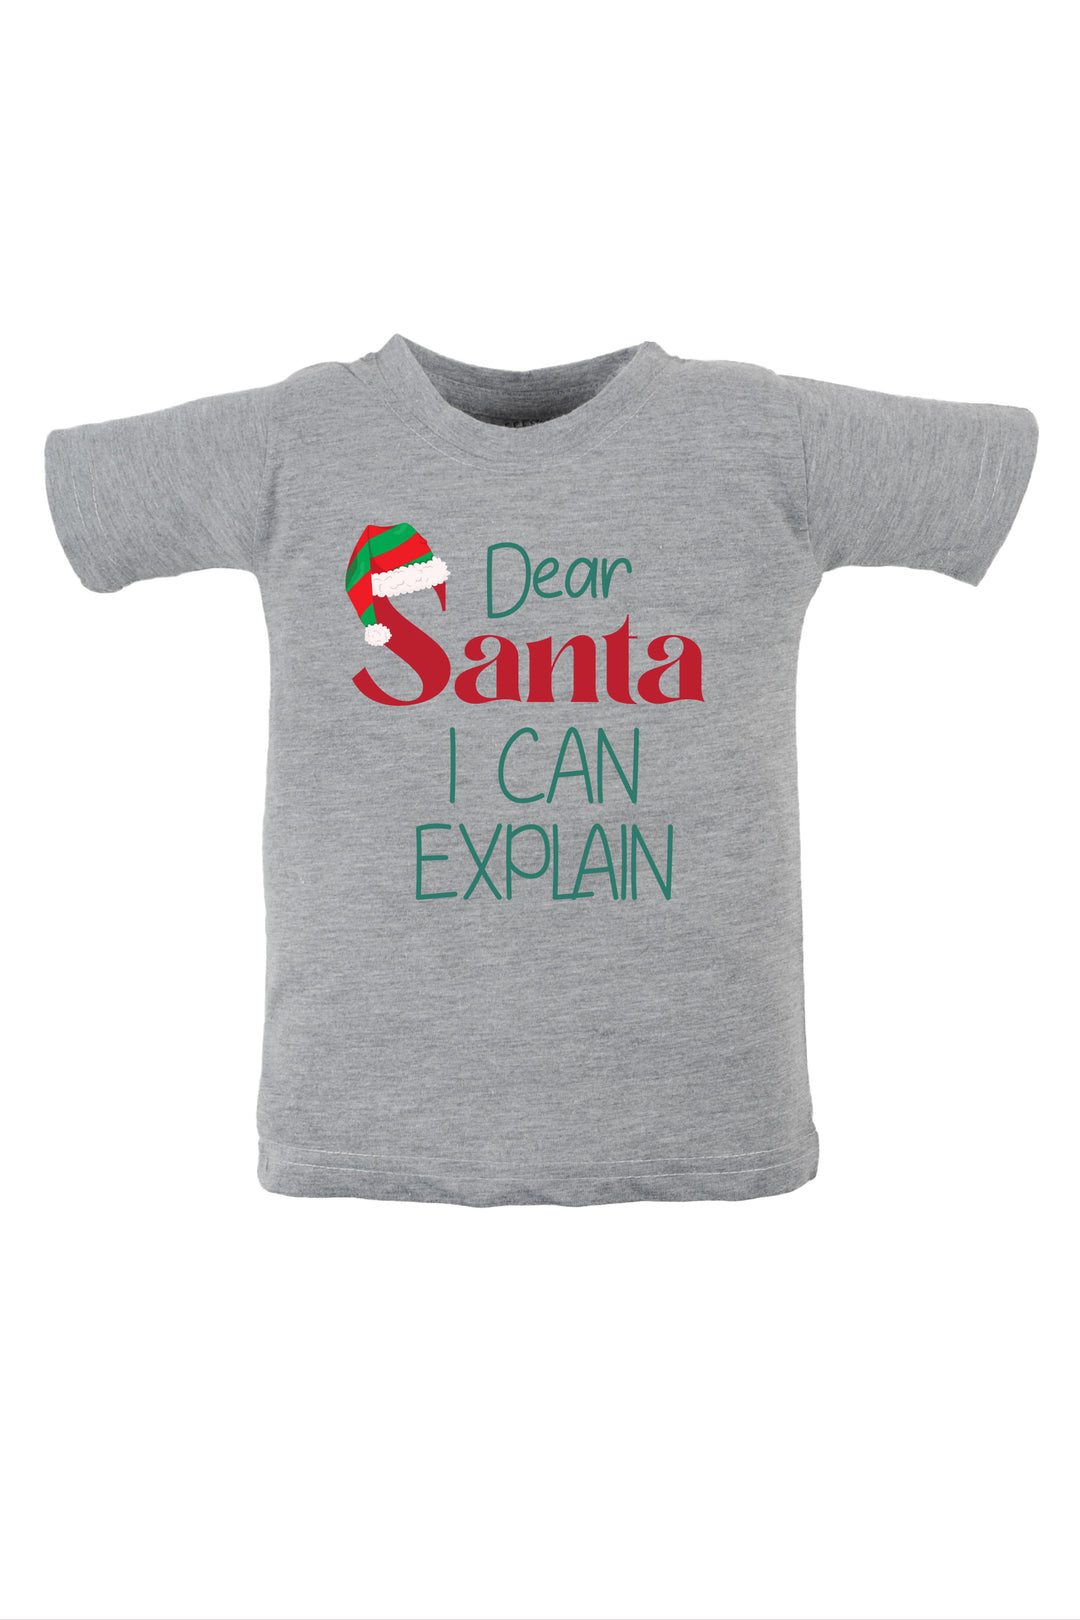 Dear Santa I Can Explain Kids T Shirt